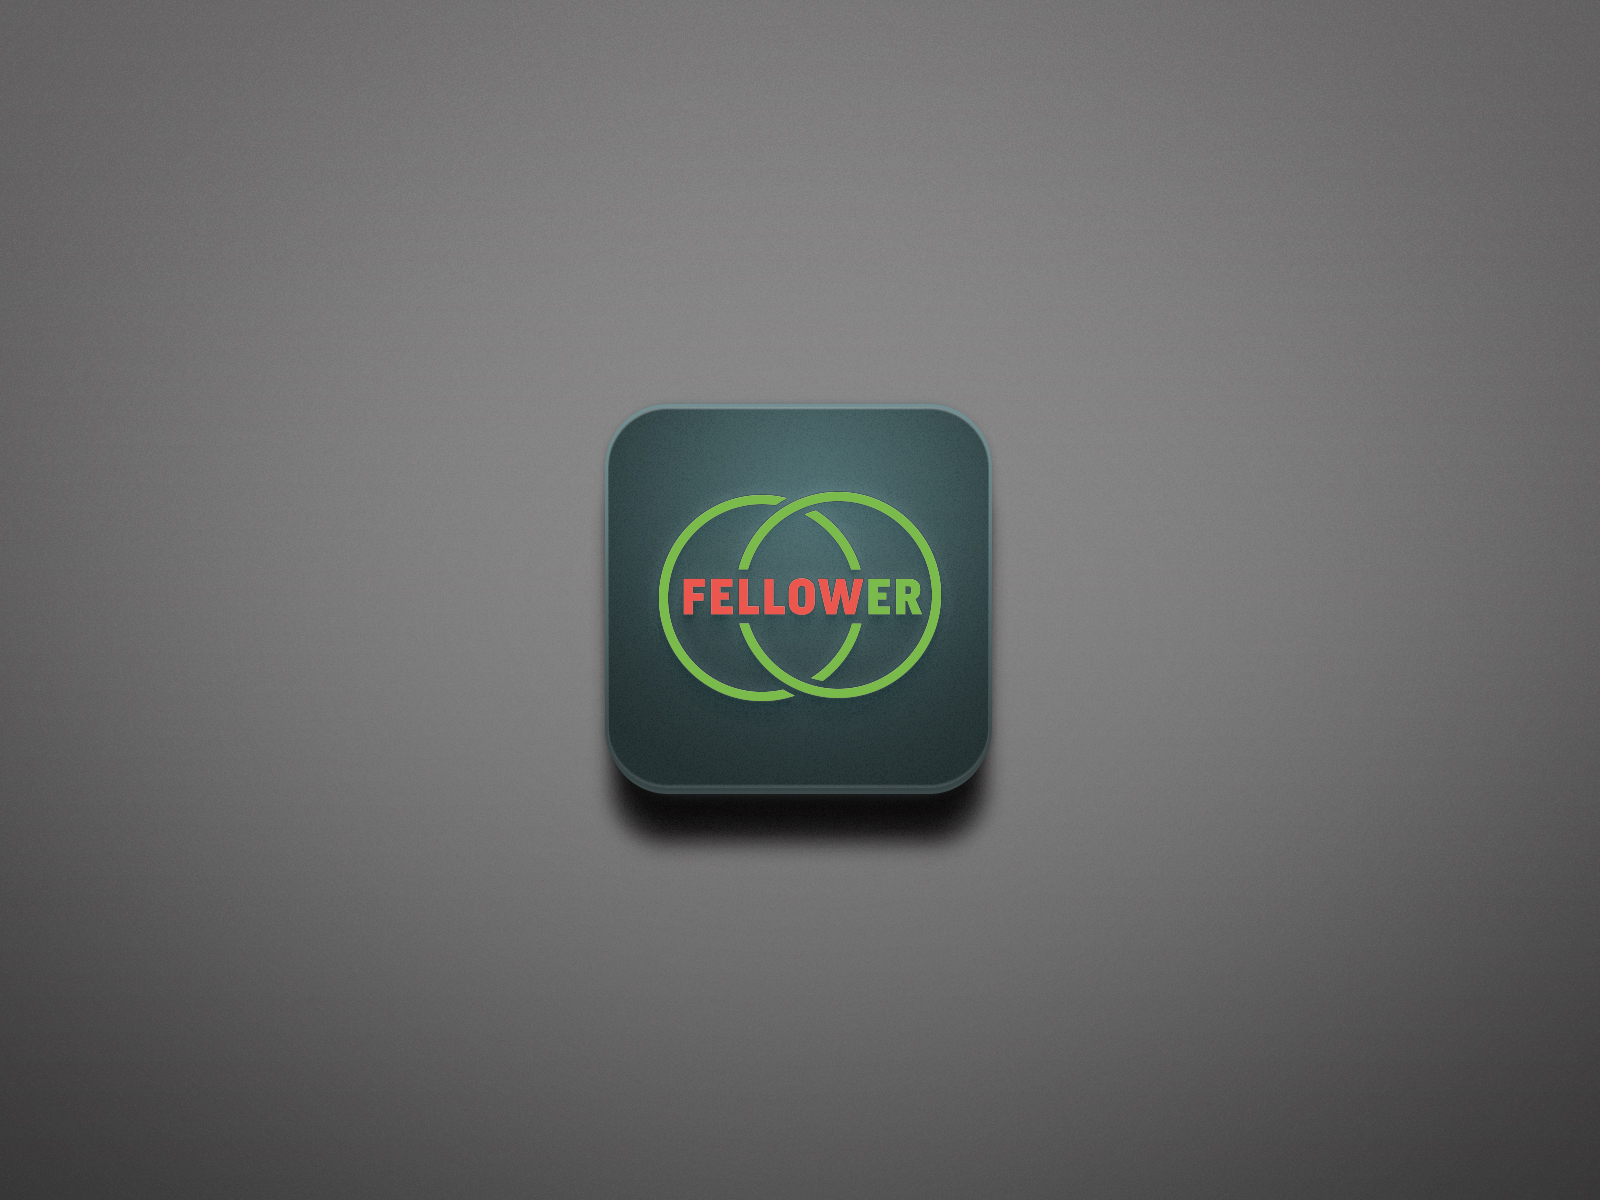 »Fellower« app icon and logo.